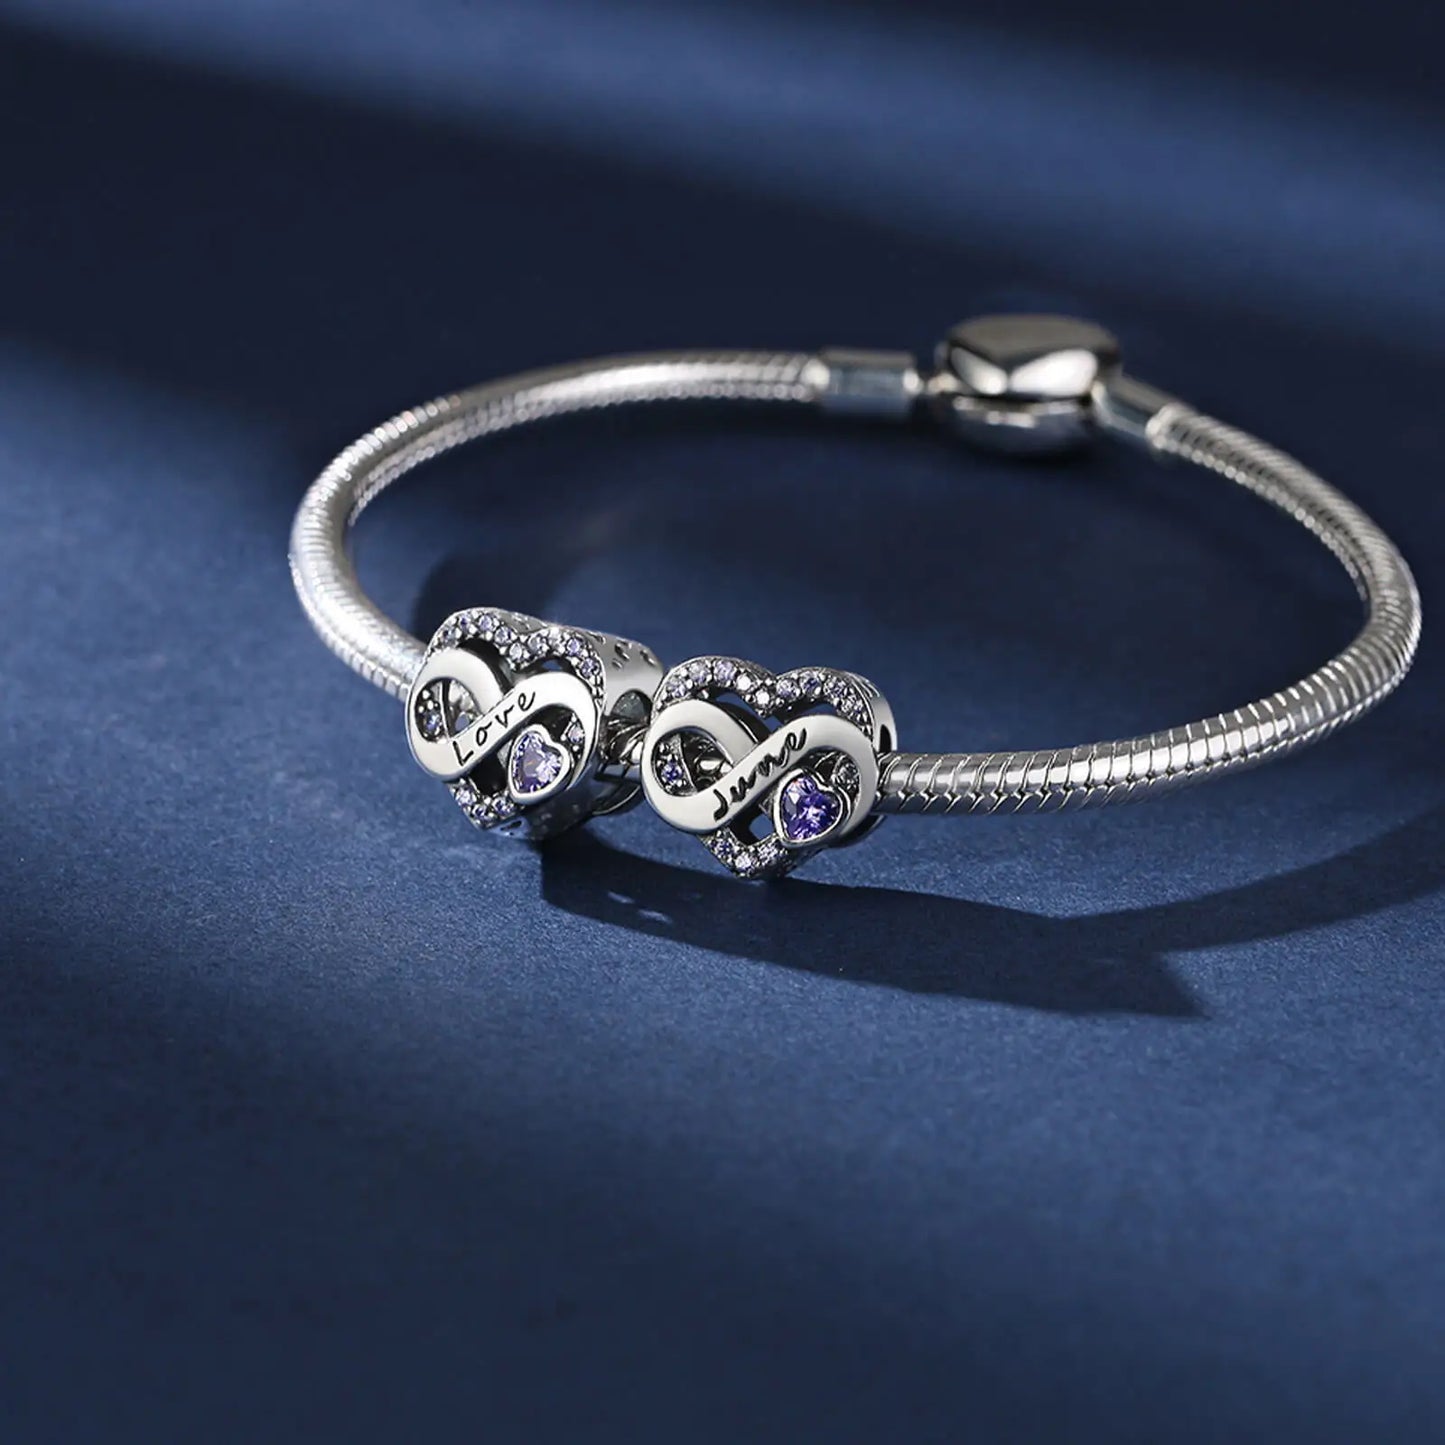 925 Sterling Silver Birthstone Heart Bead Fits Pandora Bracelet DIY